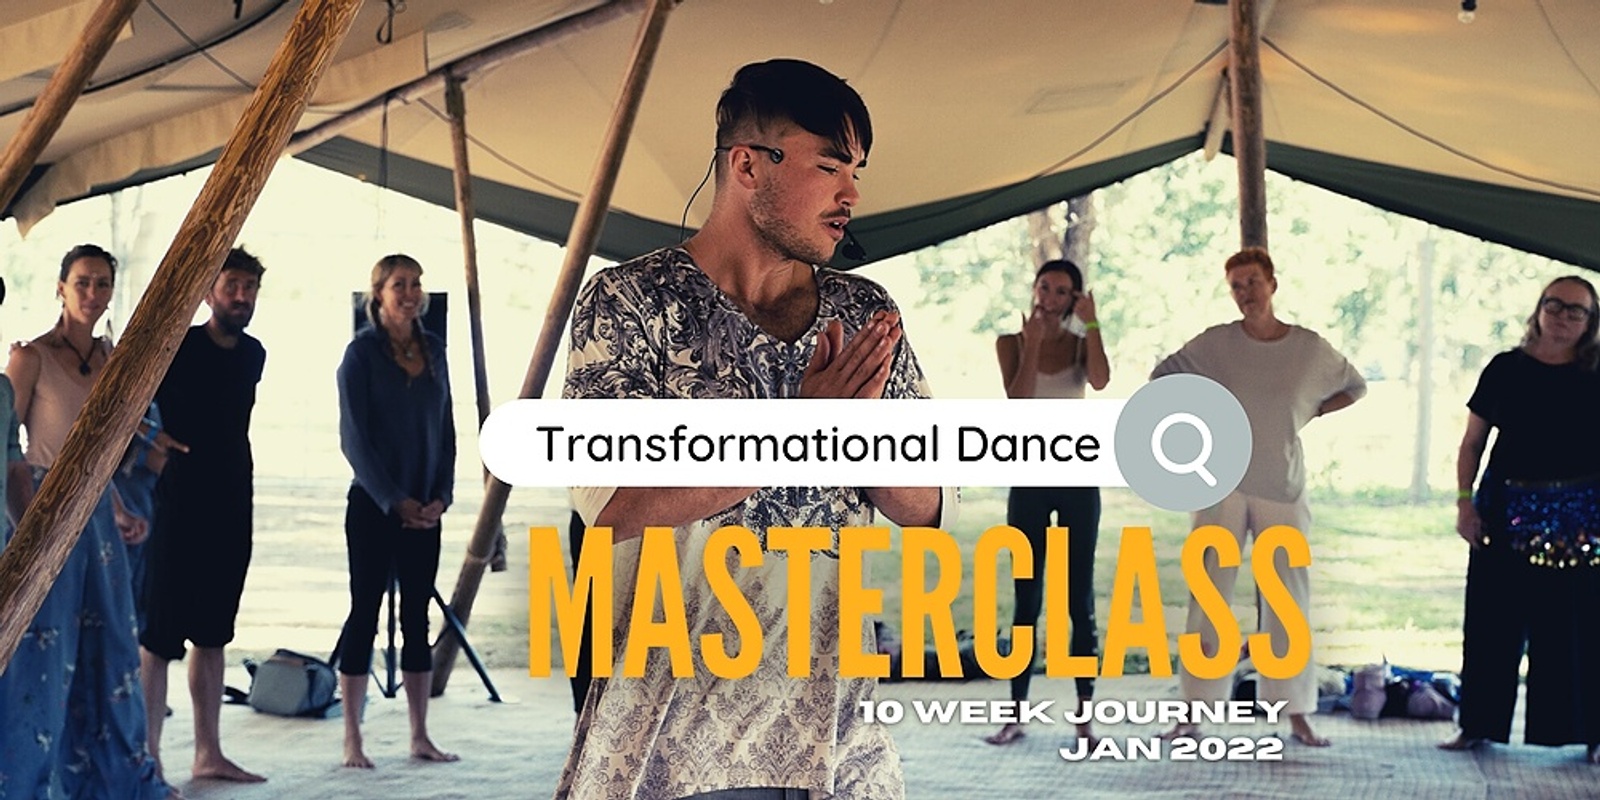 Transformational Dance Masterclass - 10 Week Journey 